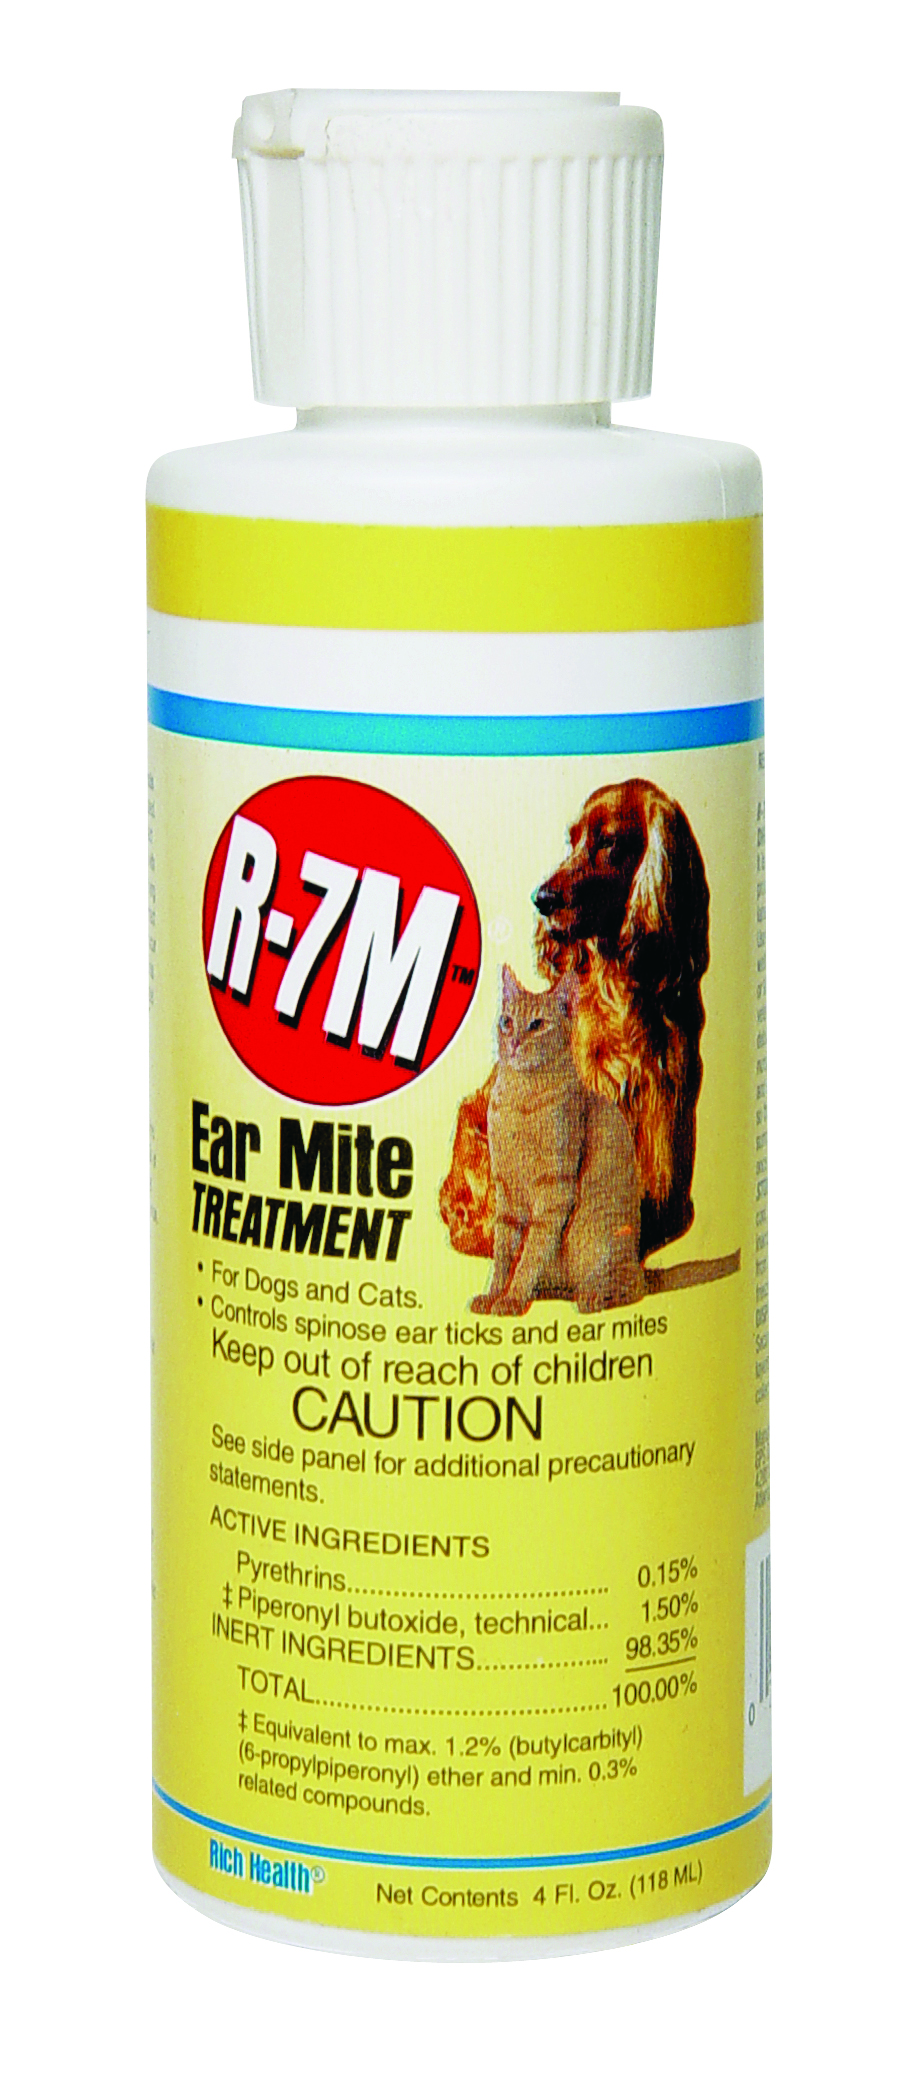 R-7M EAR MITE TREATMENT